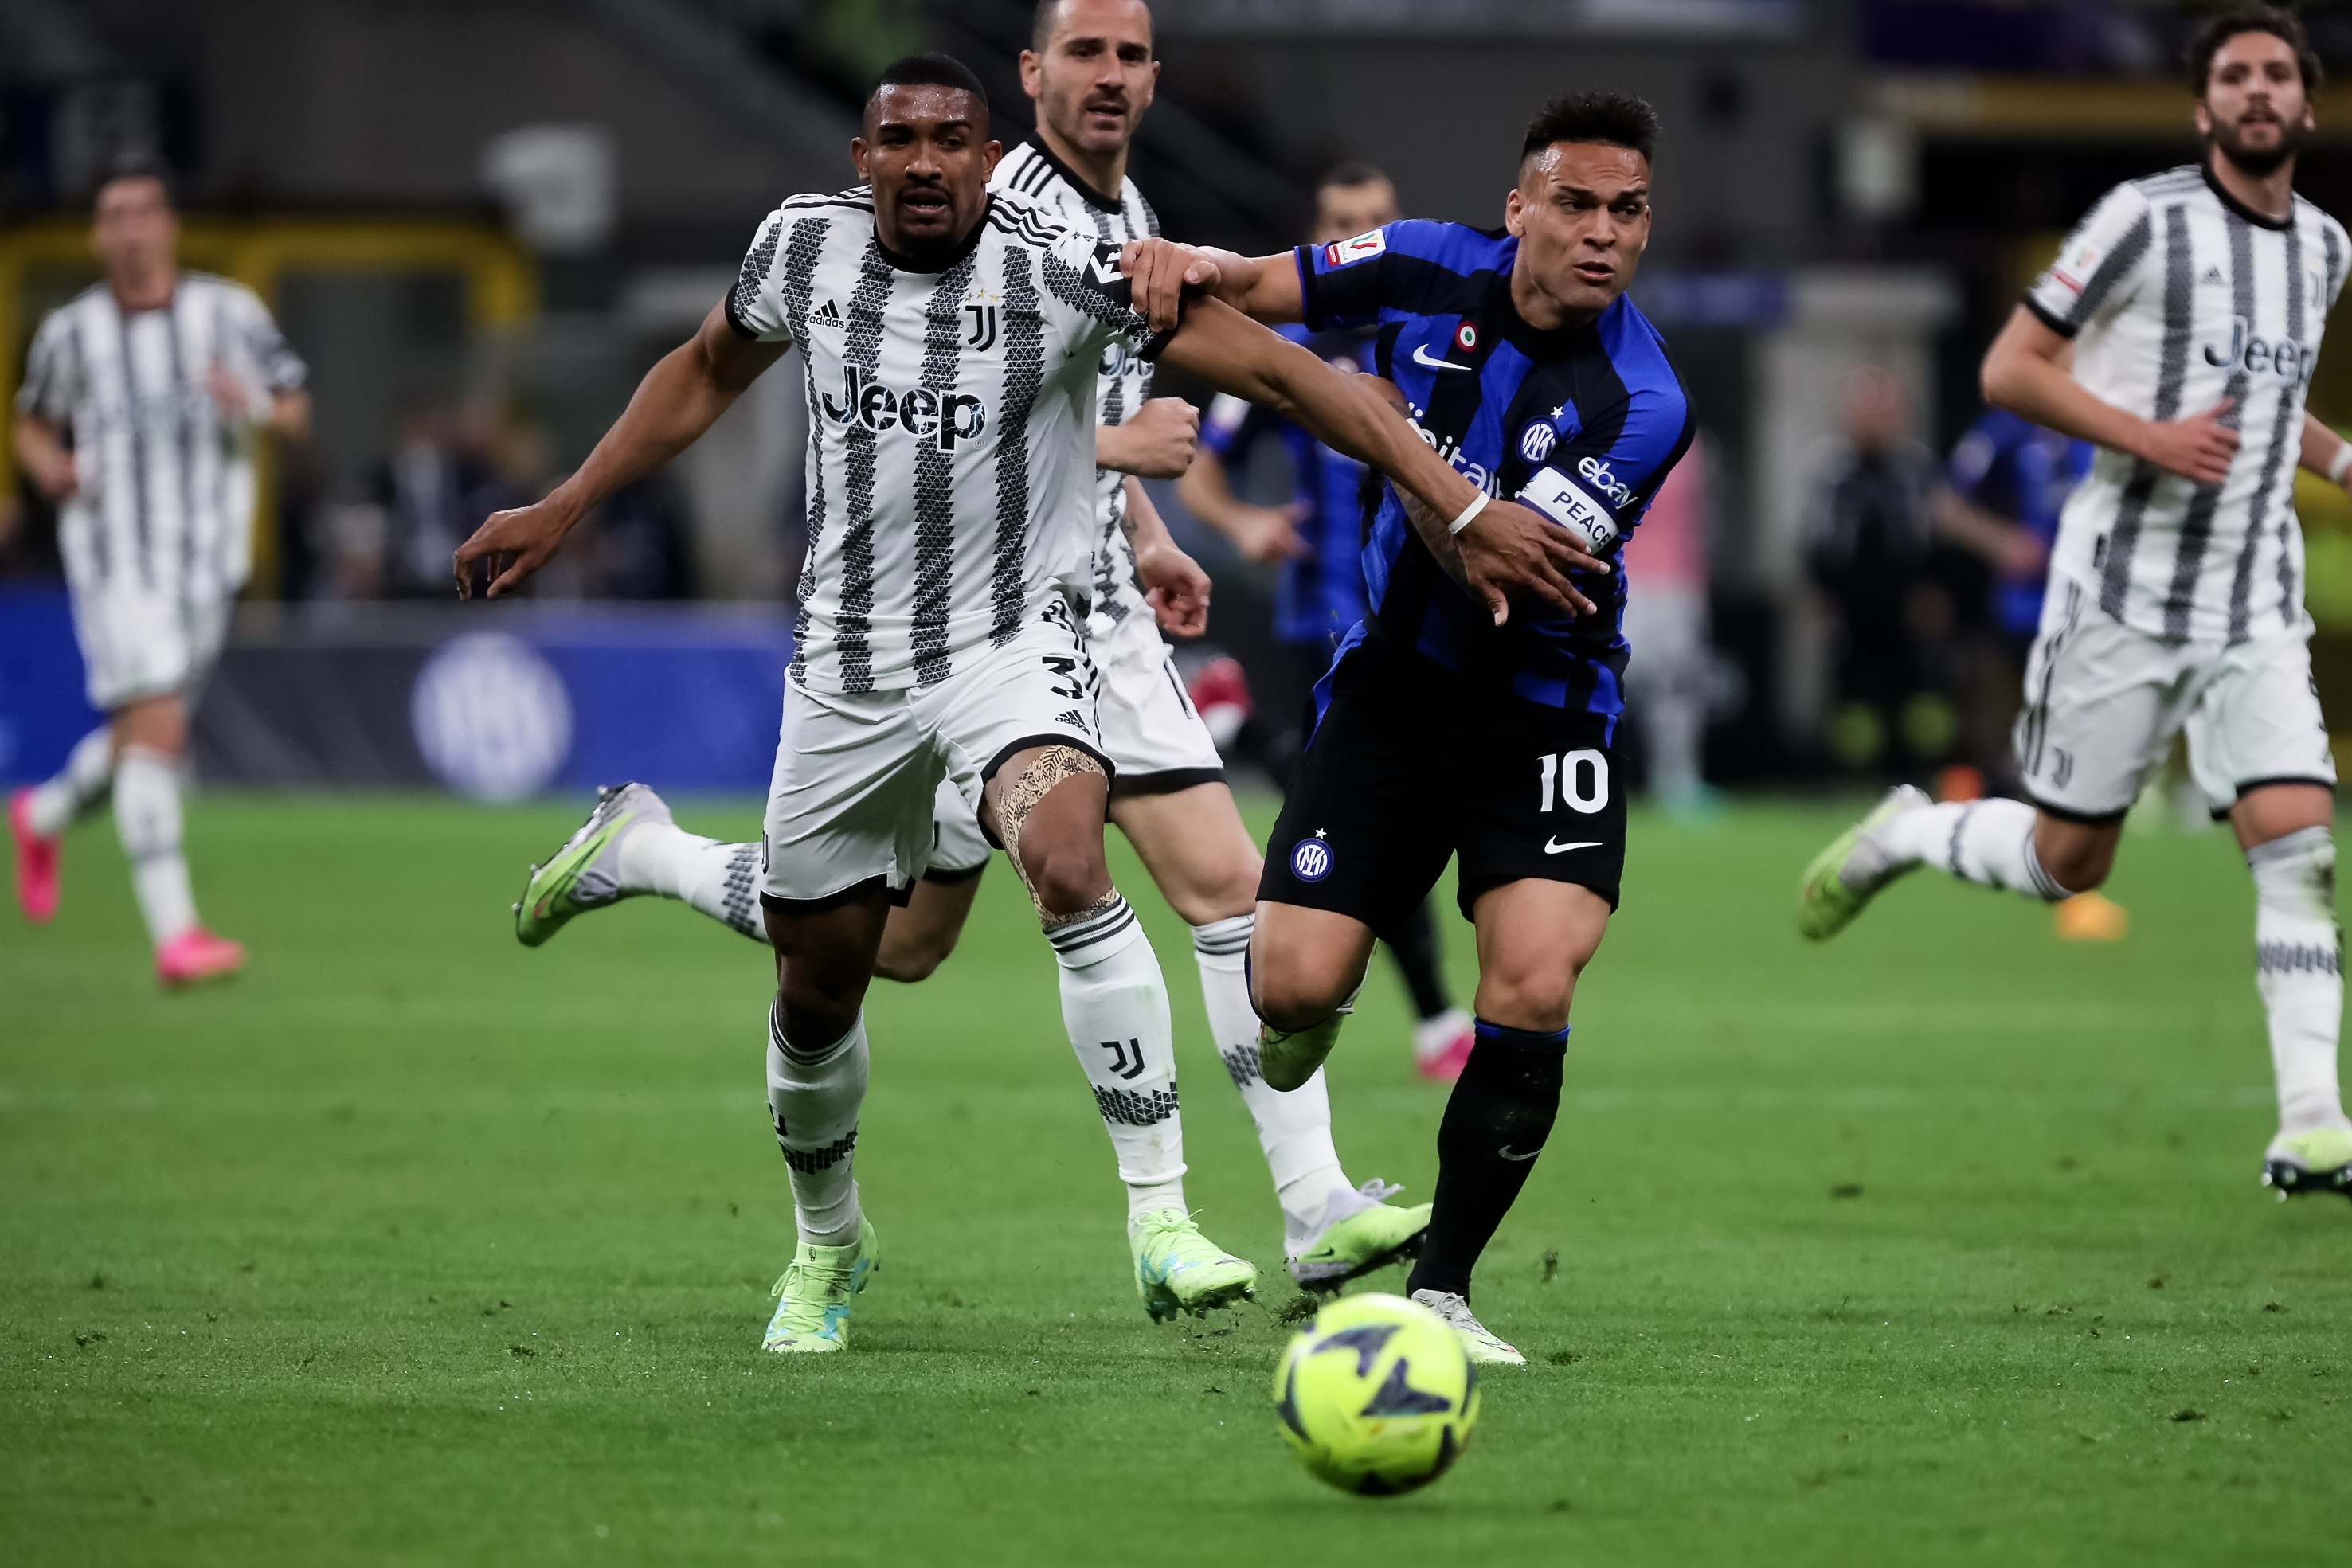 SOCCER: APR 26 Coppa Italia Semifinal - FC Internazionale Vs Juventus FC